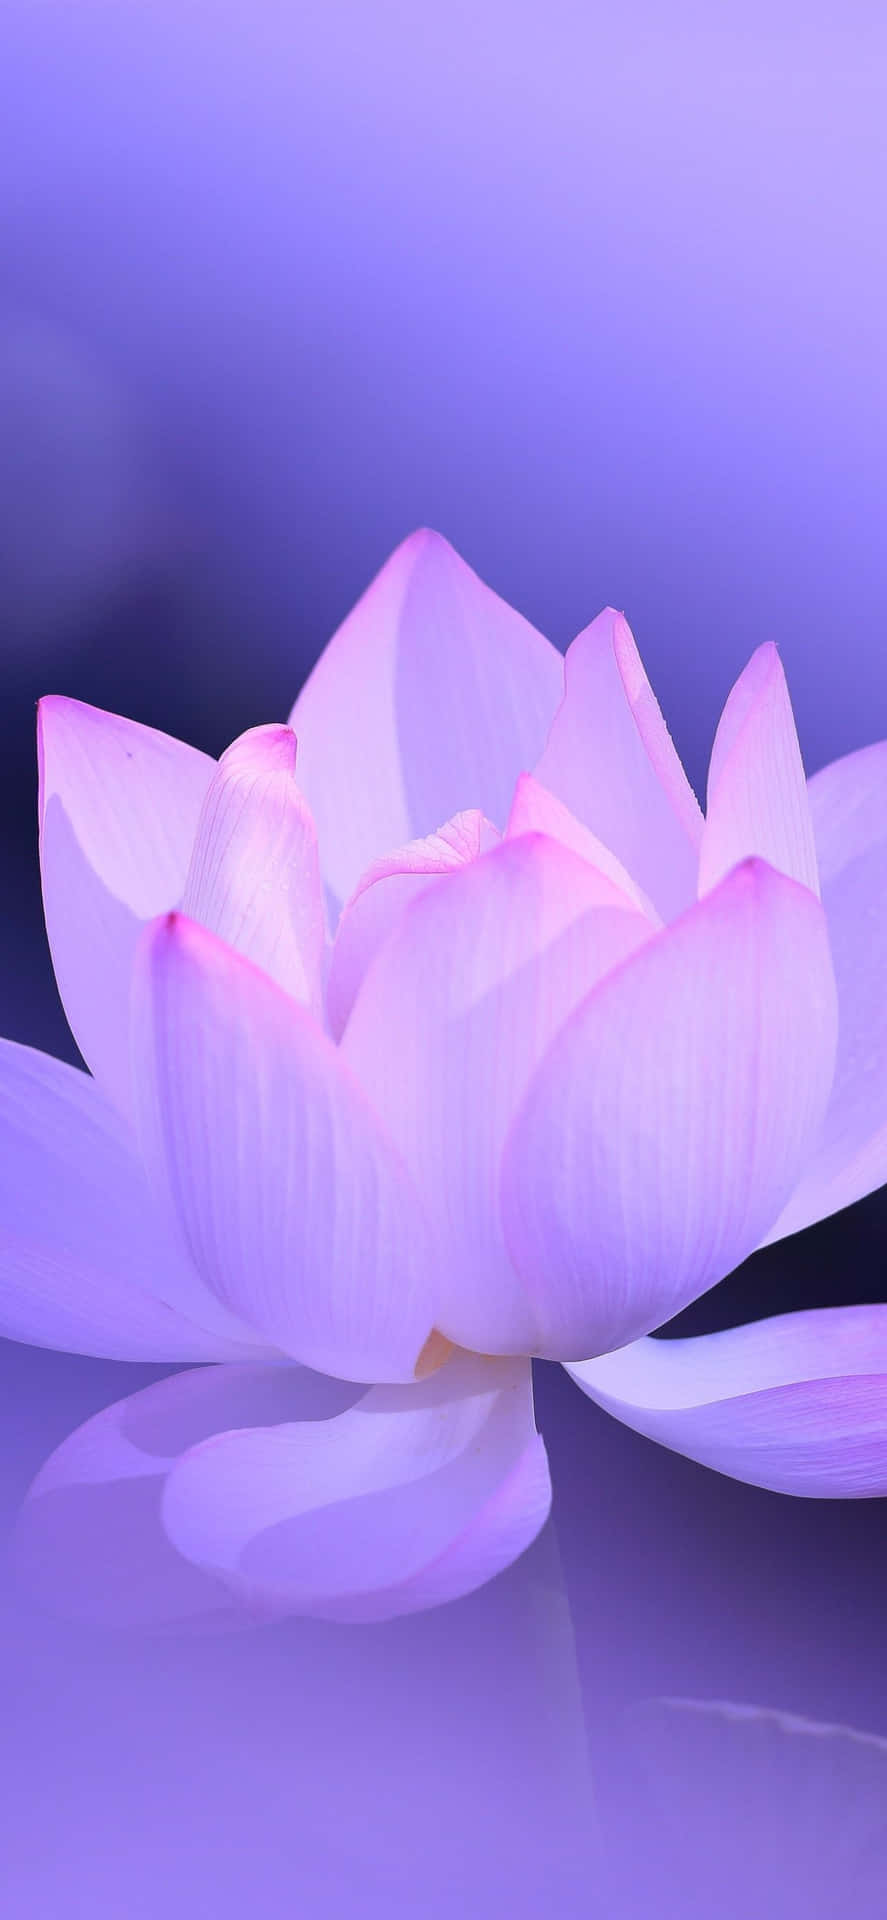 Beundrarden Zen-skönheten Hos En Rosa Lotusblomma.